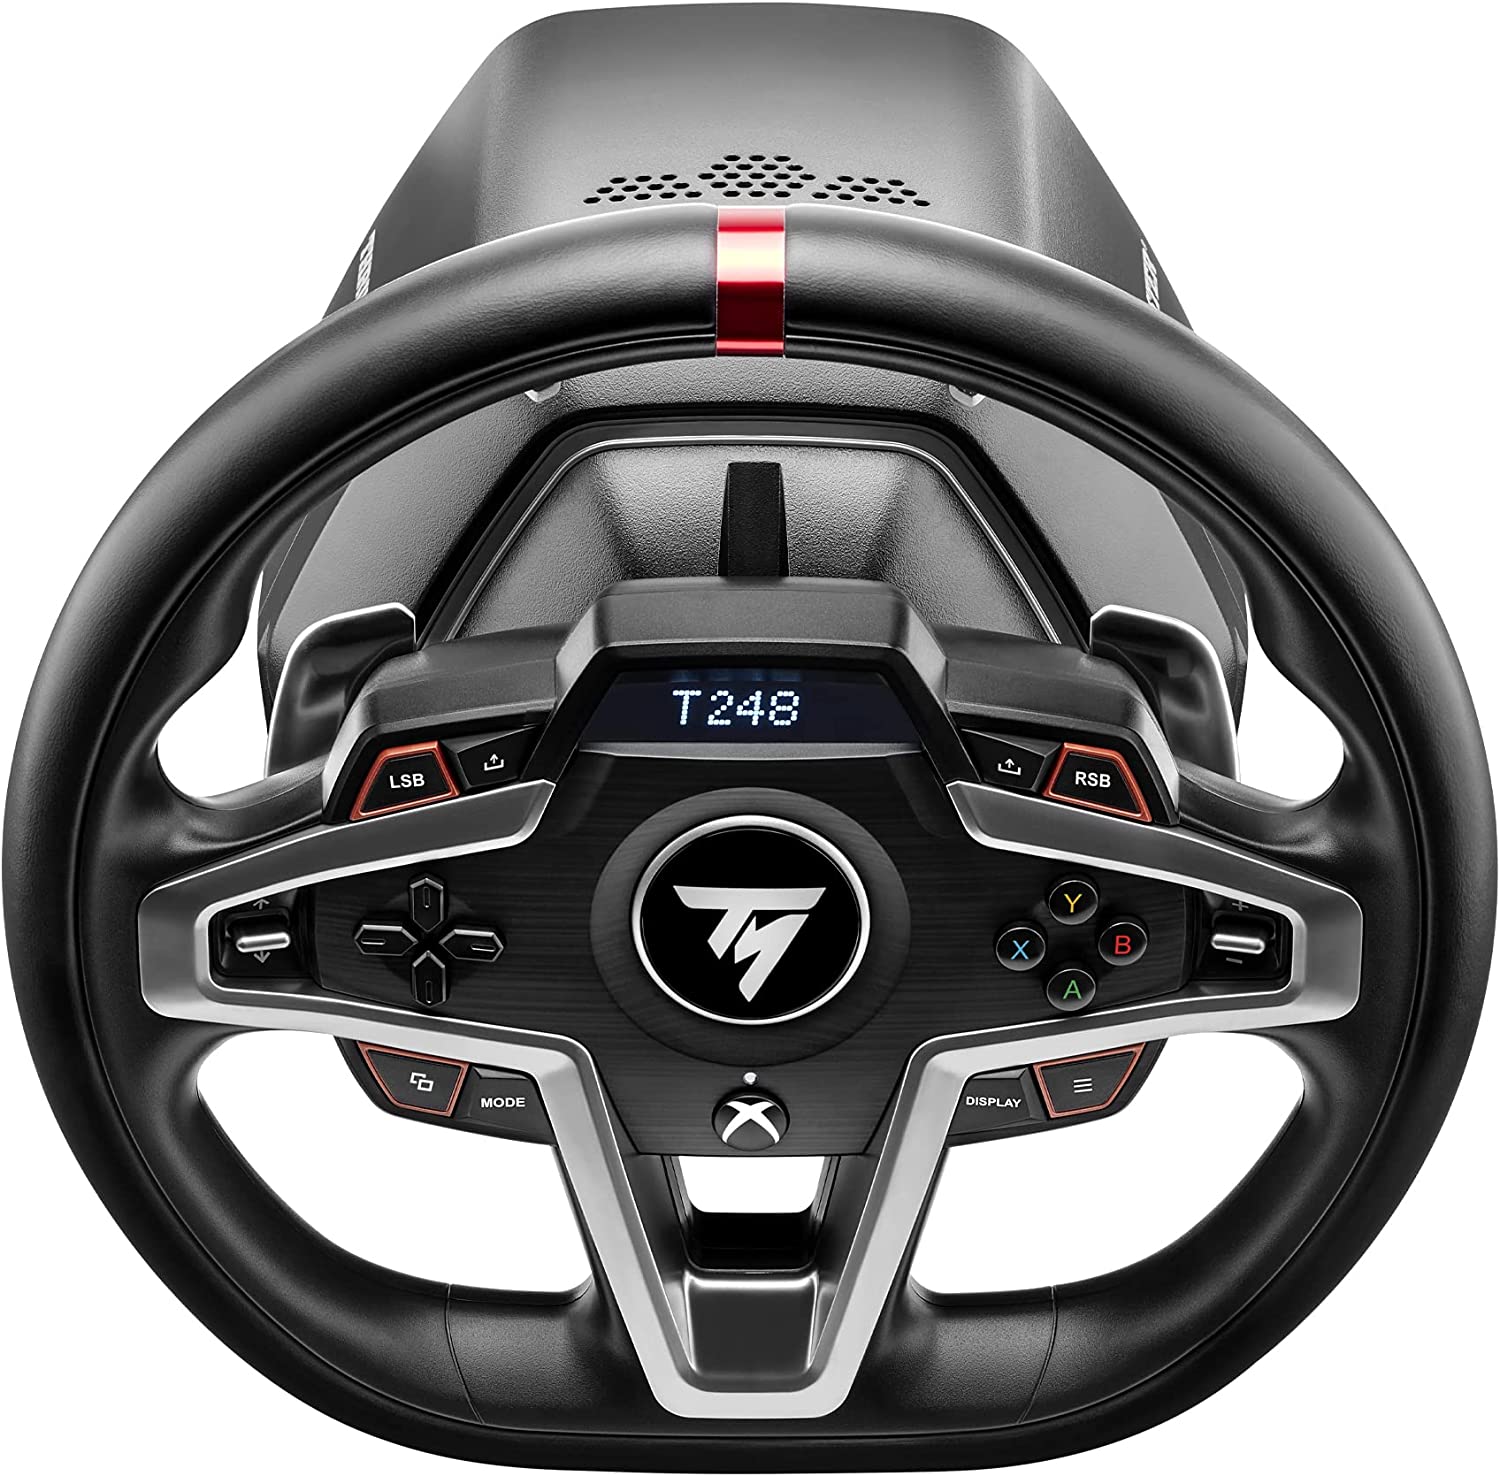 فرمان و پدال بازی مخصوص ایکس باکس Thrustmaster T248 Racing Wheel And Magnetic Pedals - ارسال ۱۰ الی ۱۵ روز کاری